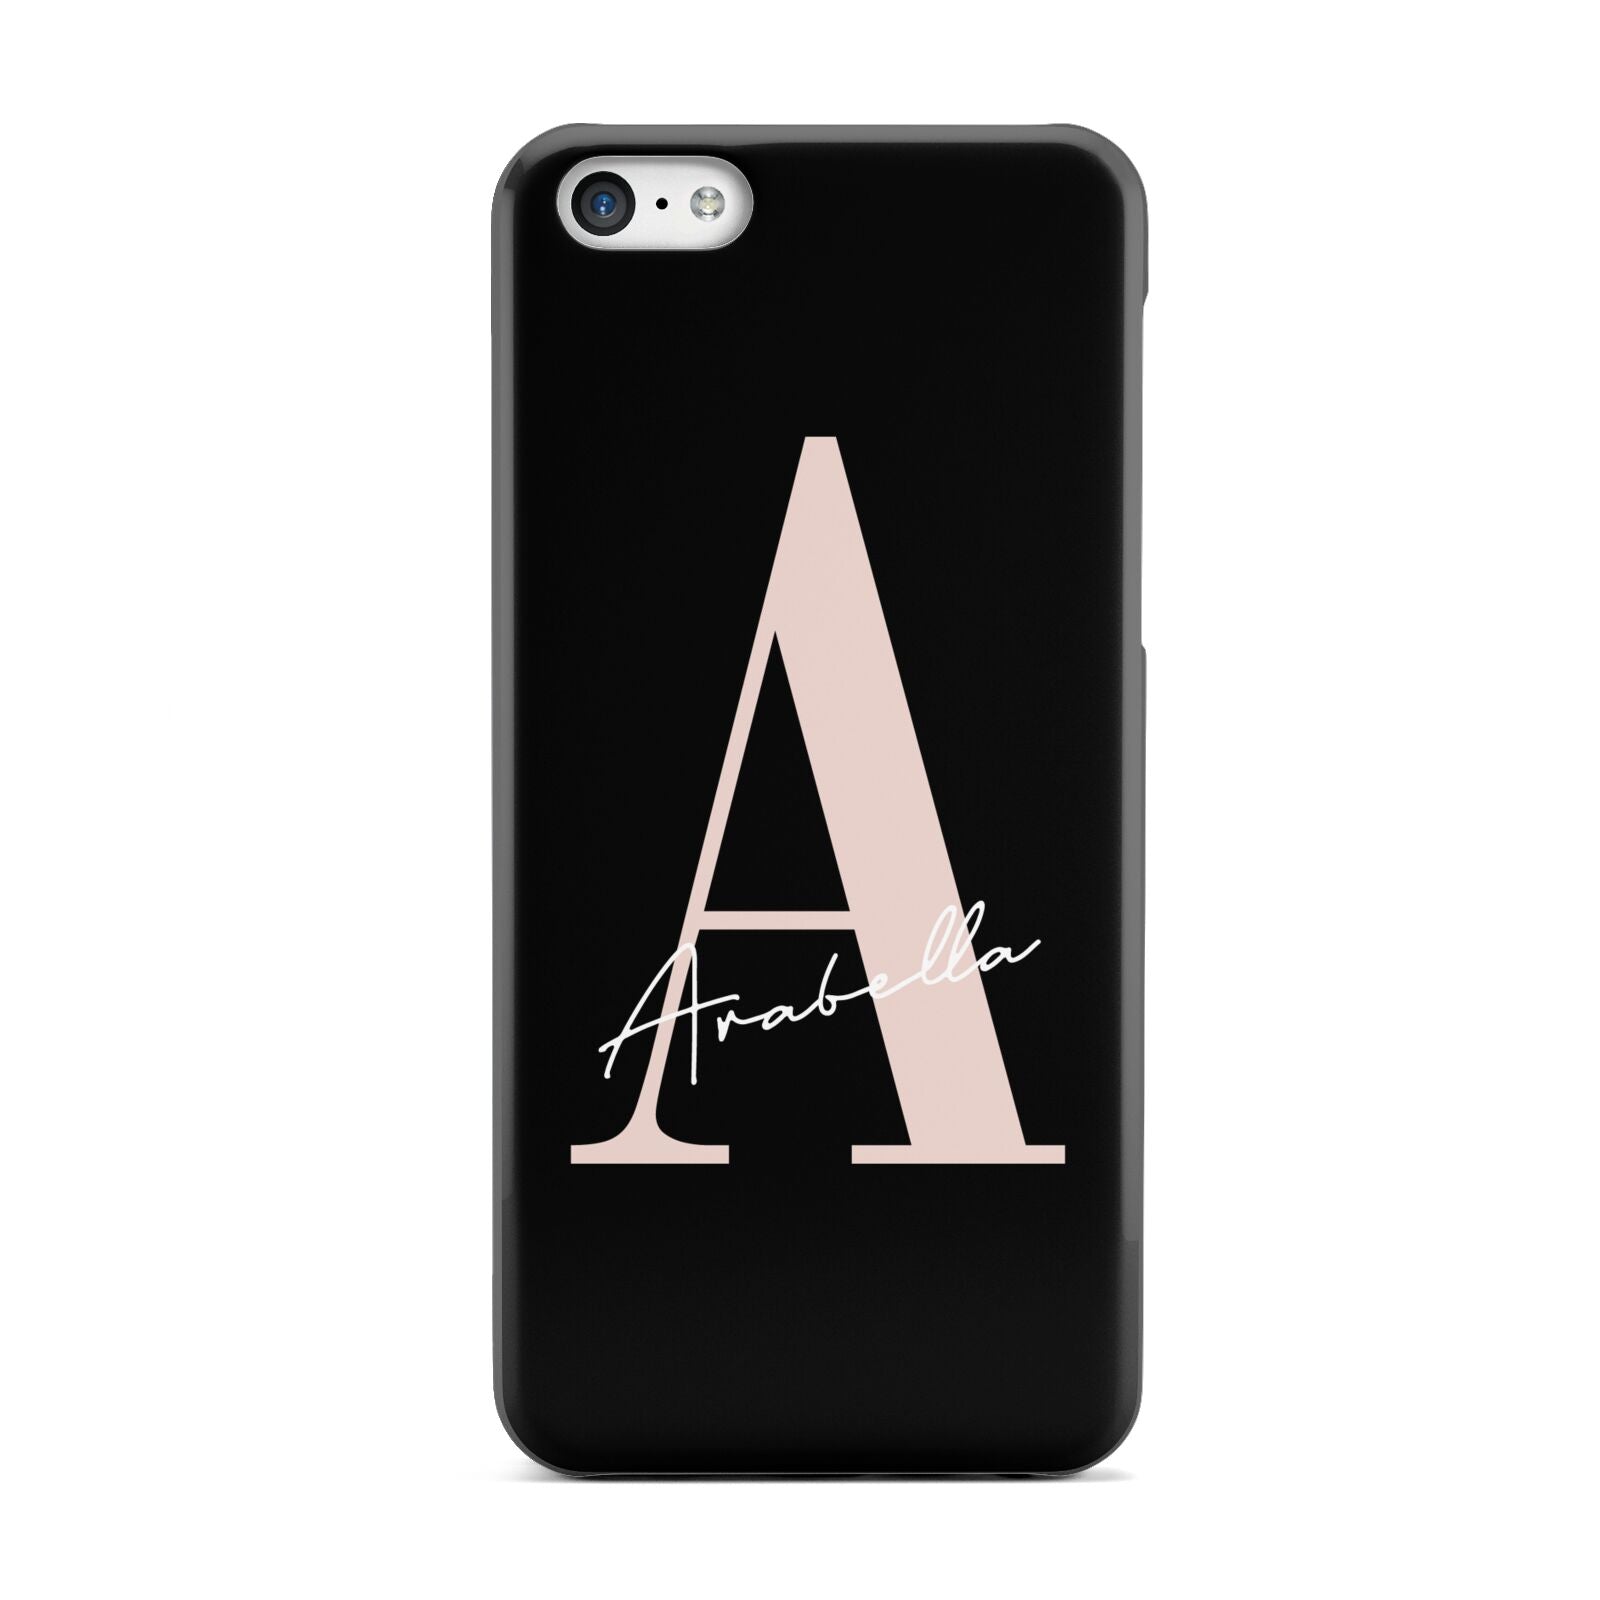 Personalised Black Pink Initial Apple iPhone 5c Case